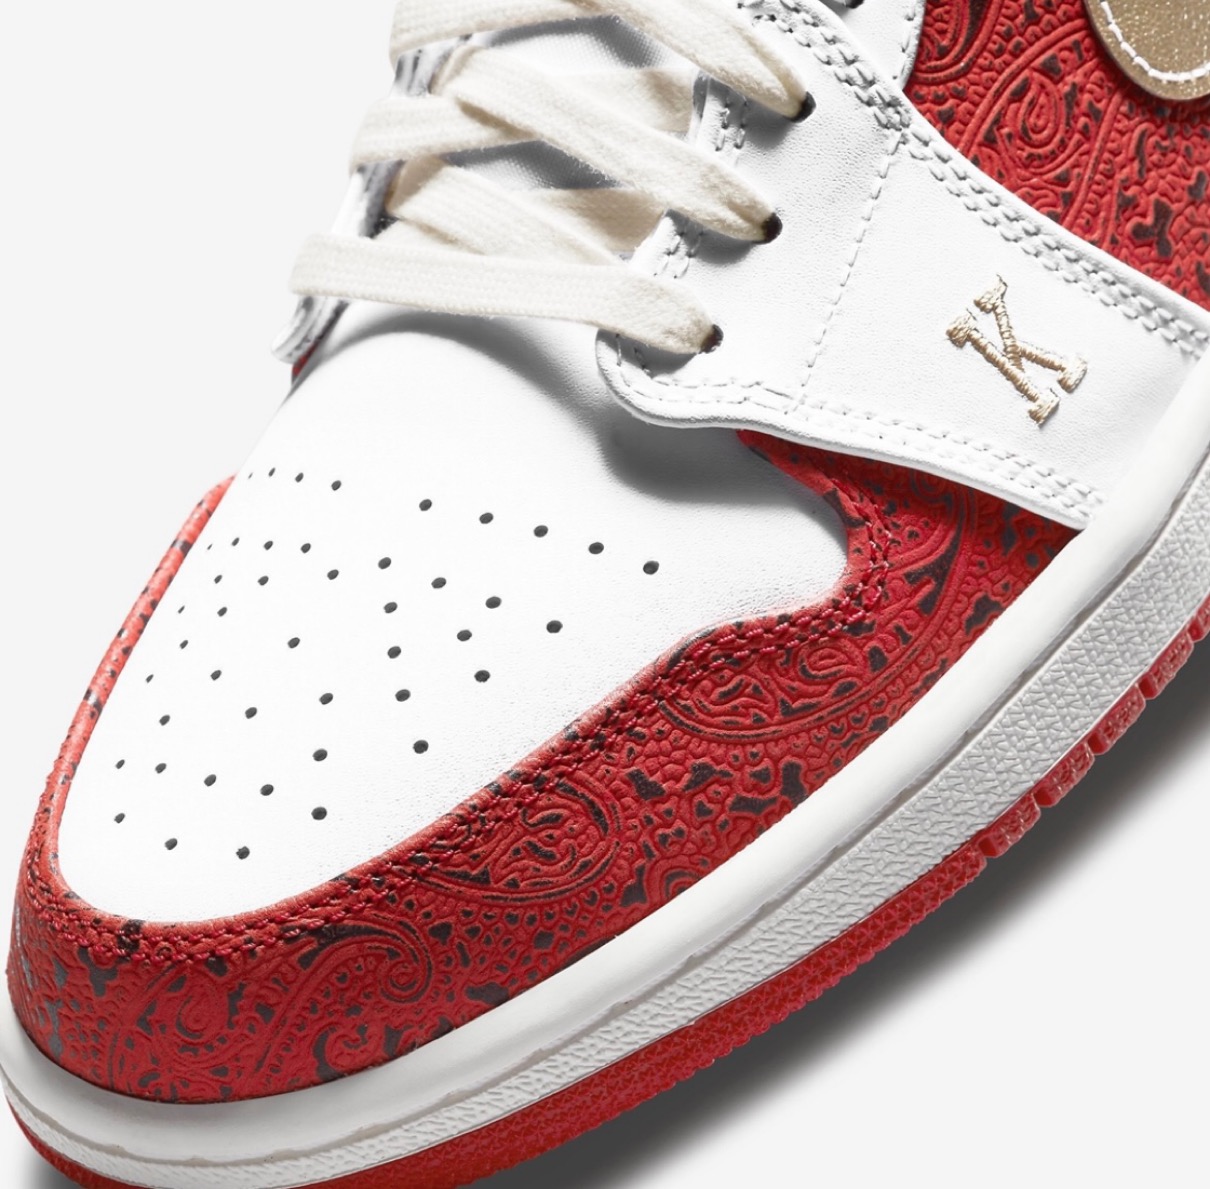 NikeAir Jordan 1 Low SE “Spades”が国内日に発売予定   UP TO DATE